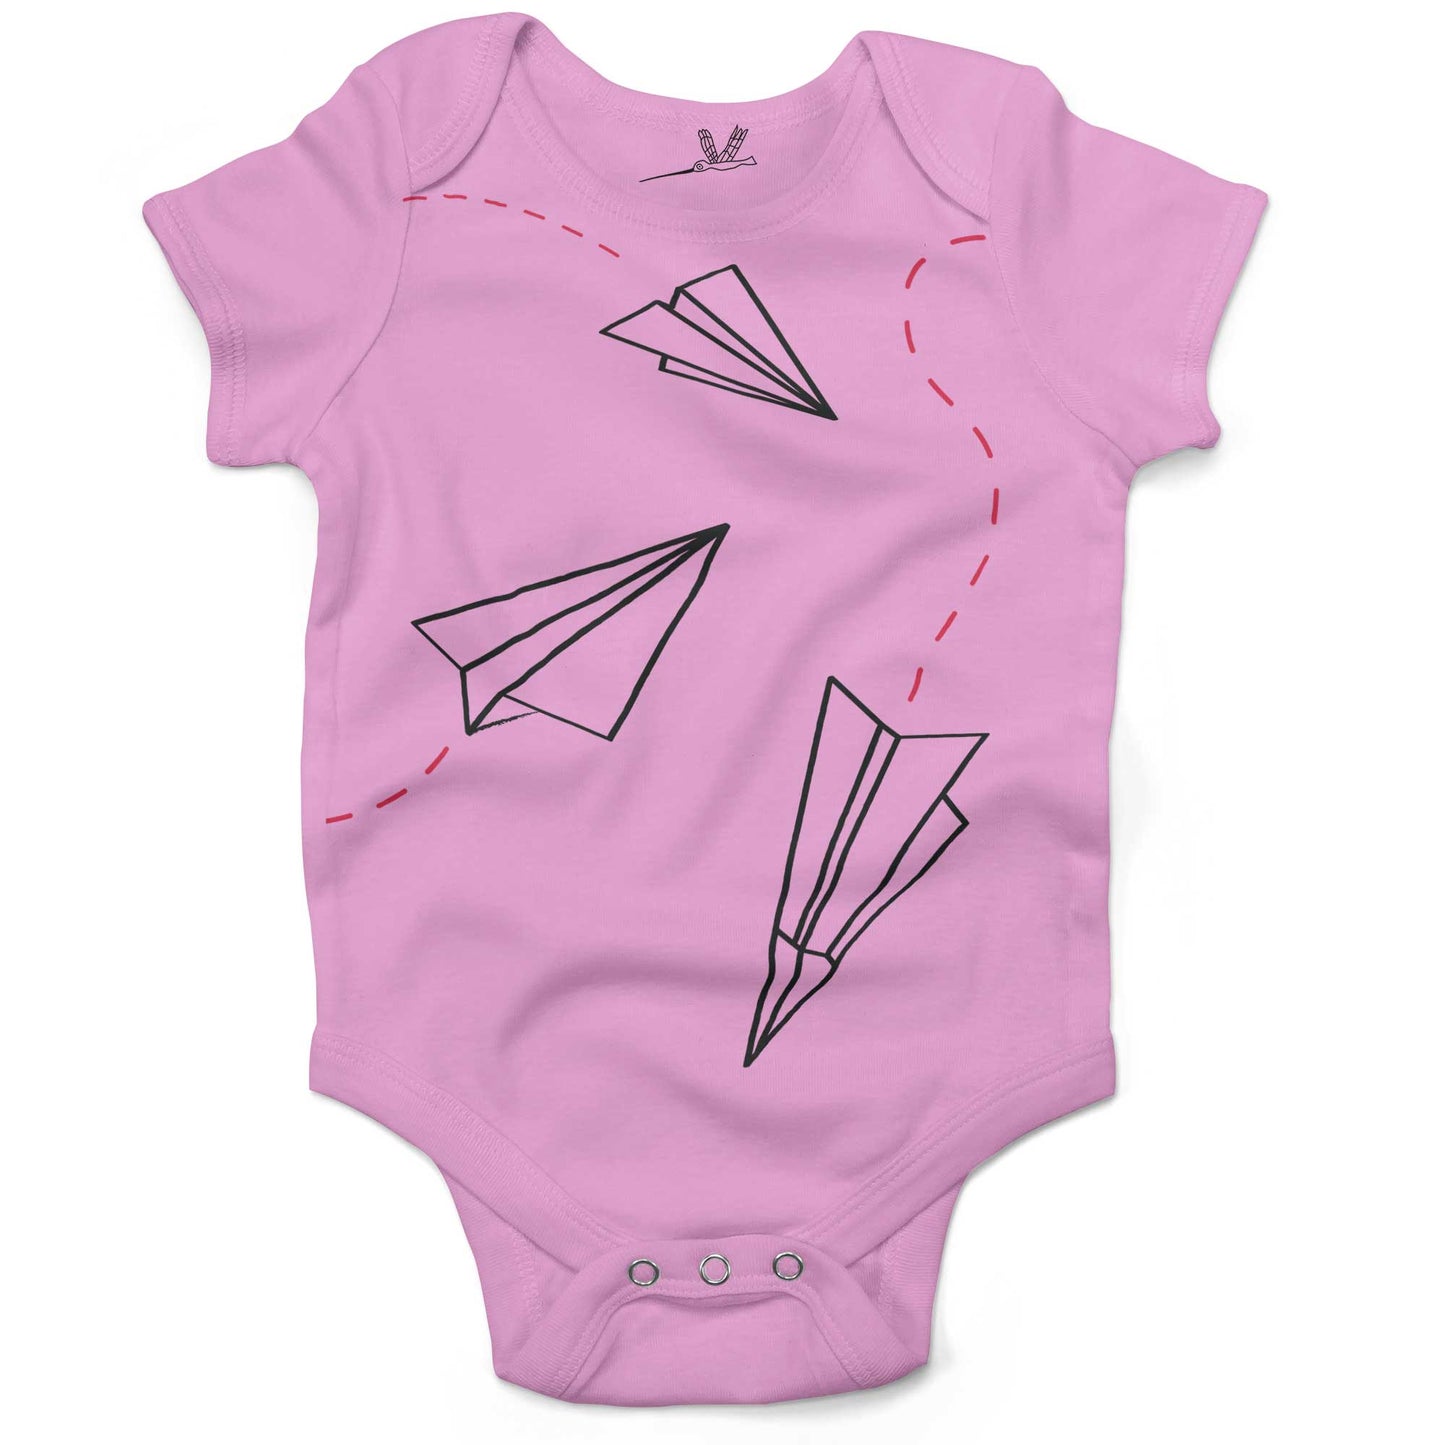 Paper Airplanes Infant Bodysuit or Raglan Baby Tee-Organic Pink-3-6 months